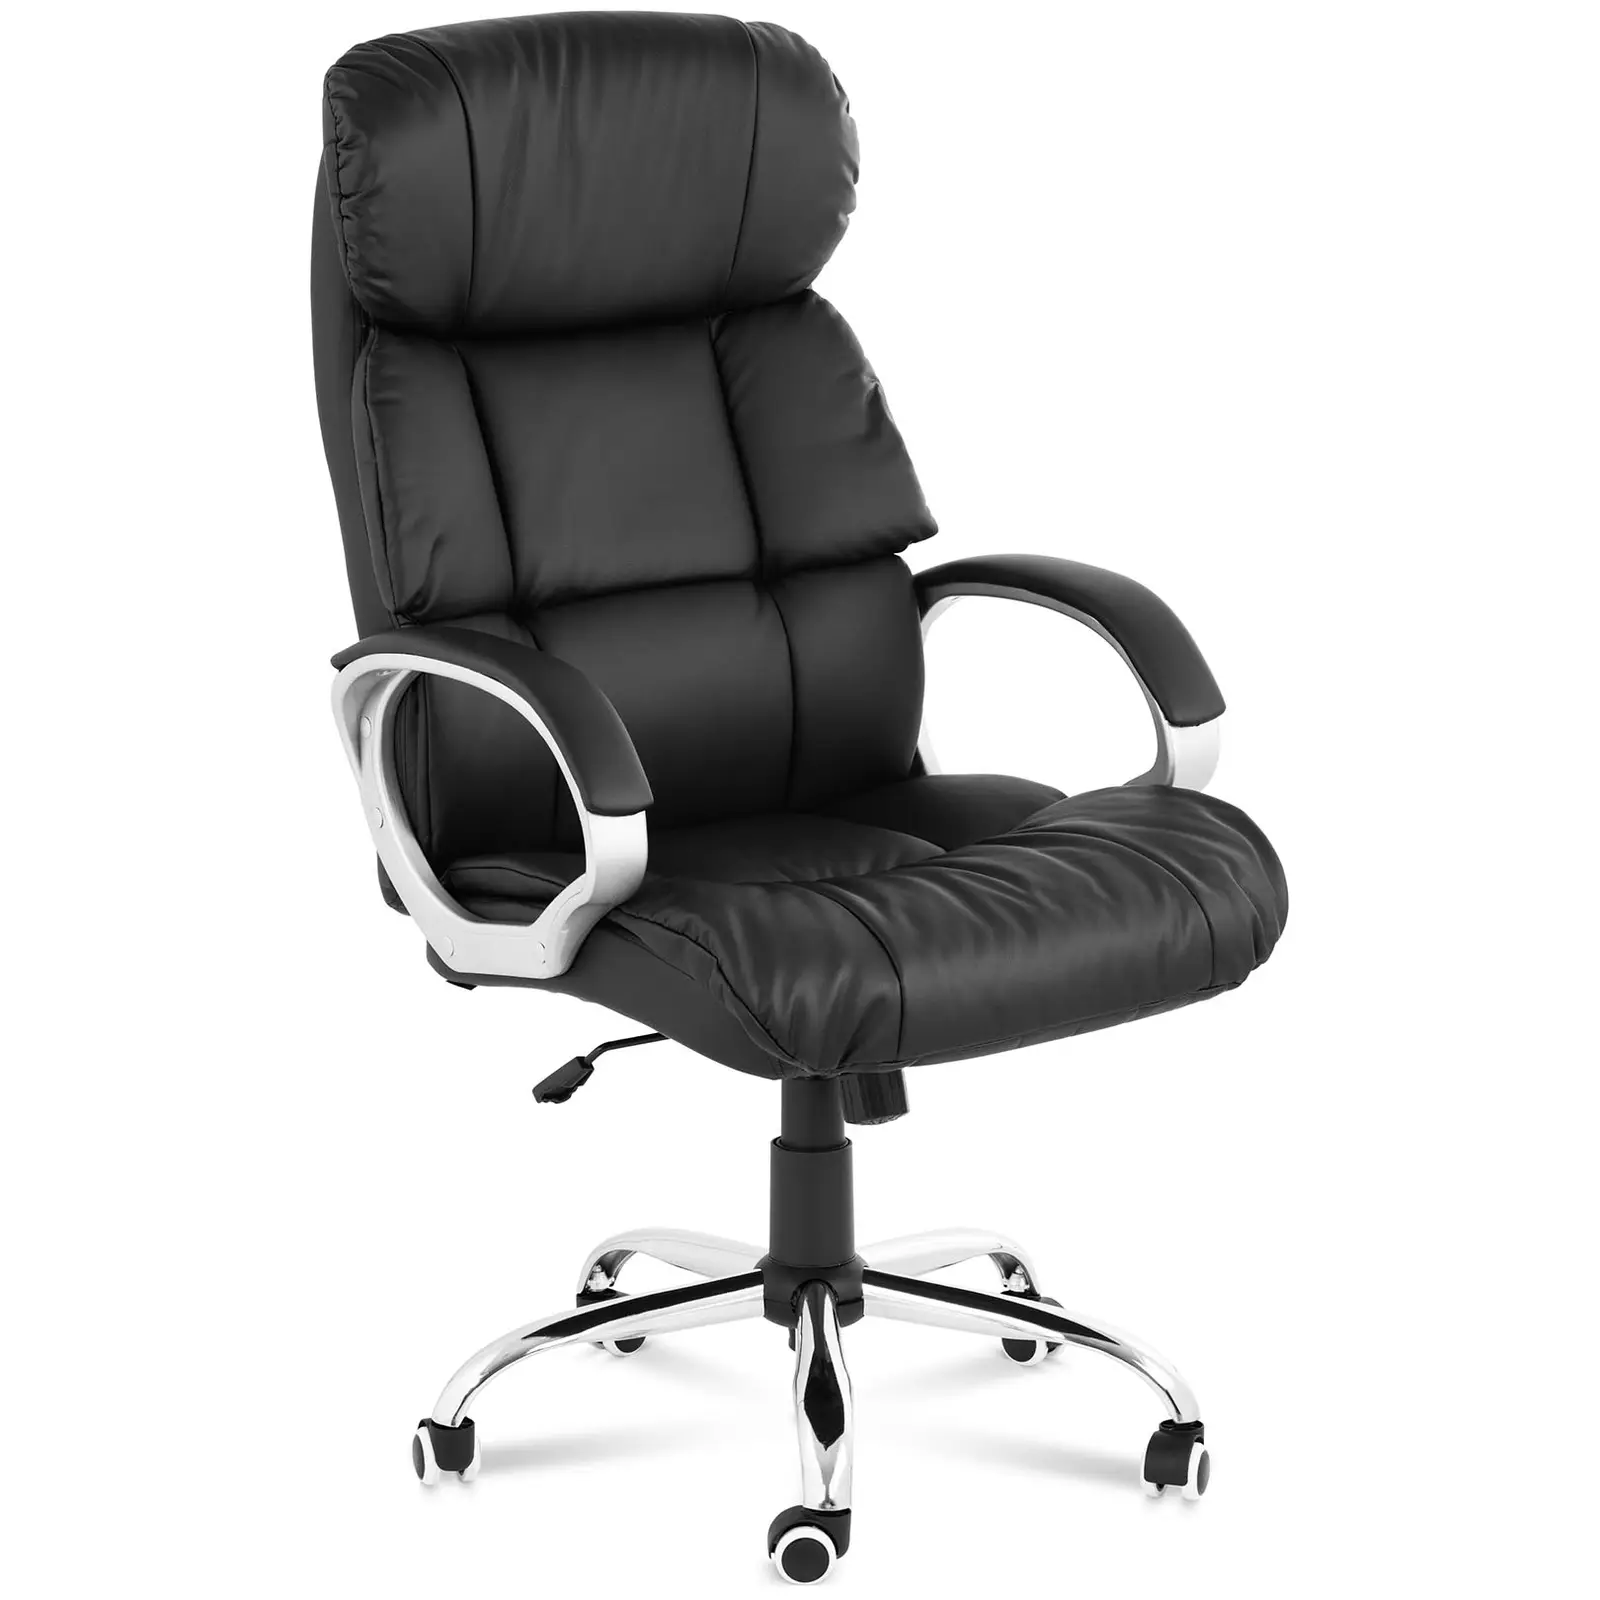 Office Chair - 180 kg - black